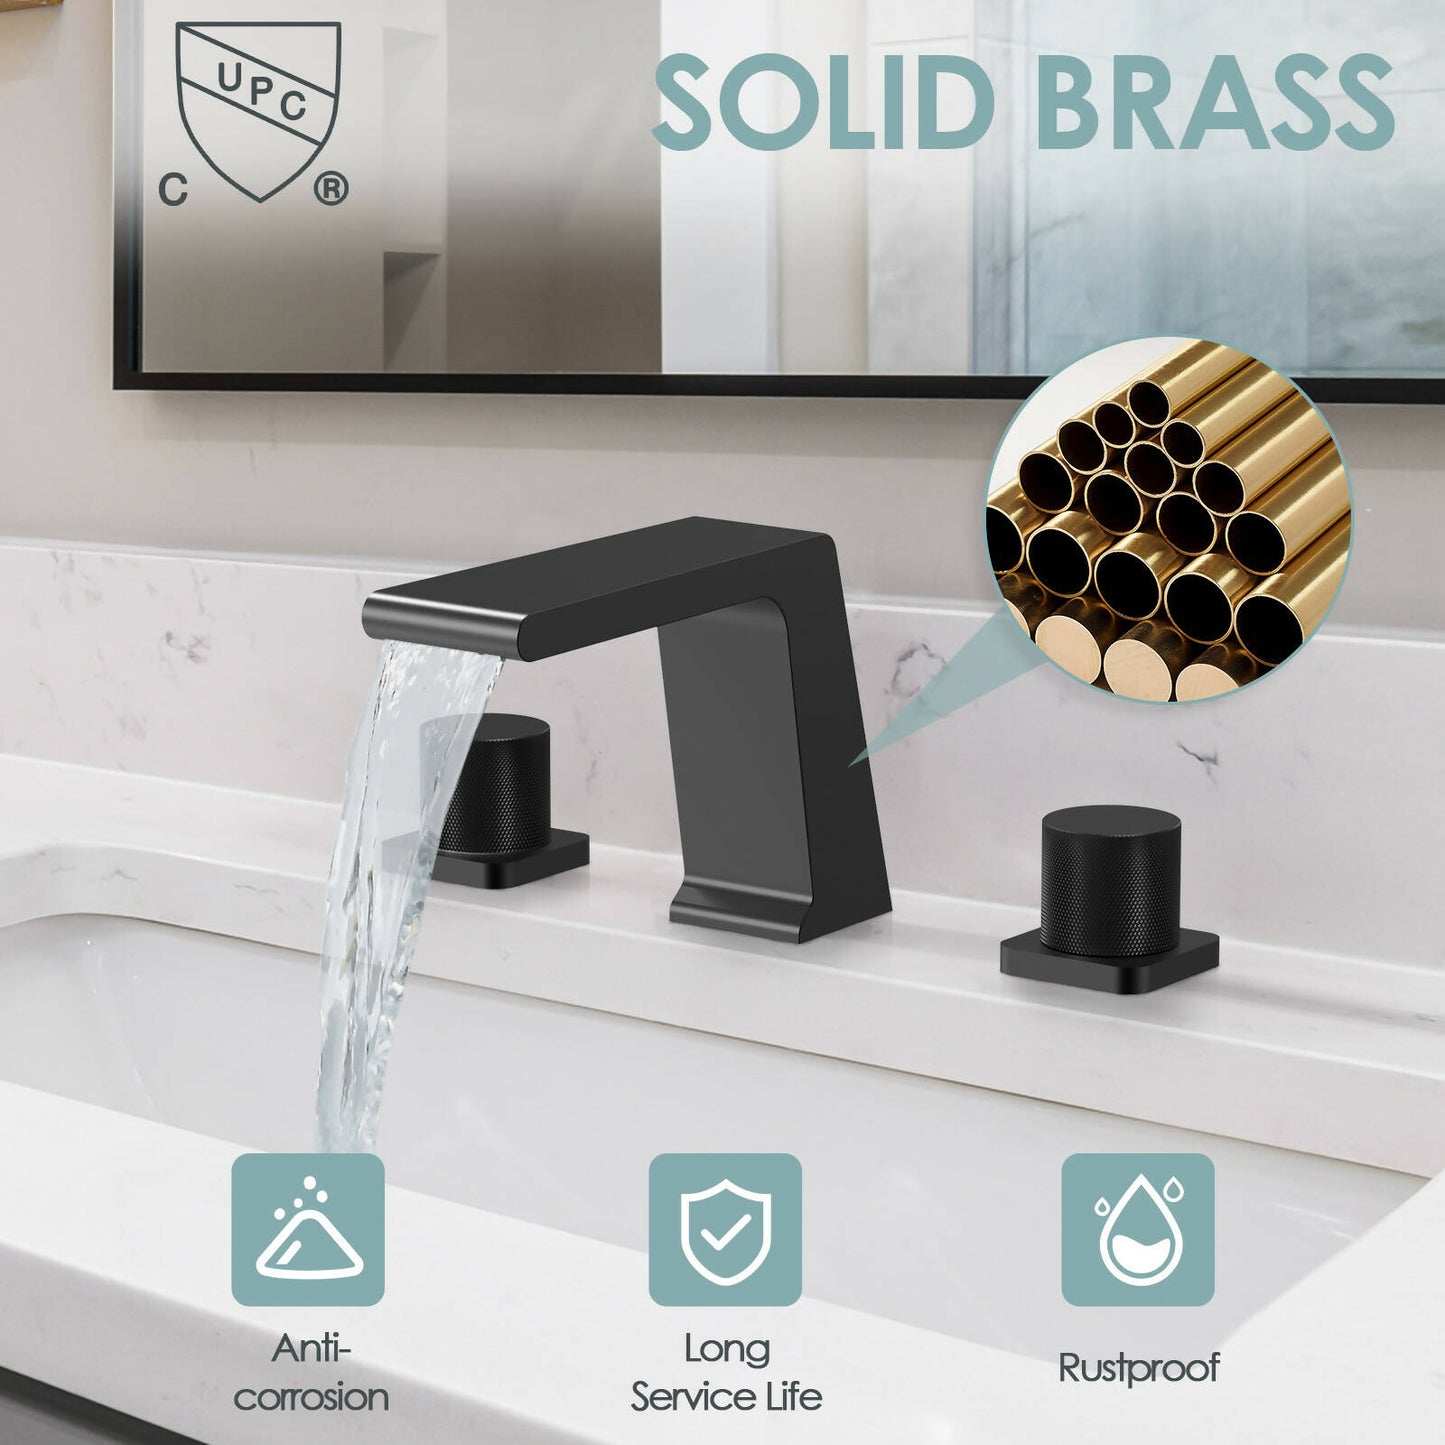 AquaSpa Elegant 2-Handle Widespread Bathroom Faucet: Deck Mount, 3-Hole Design